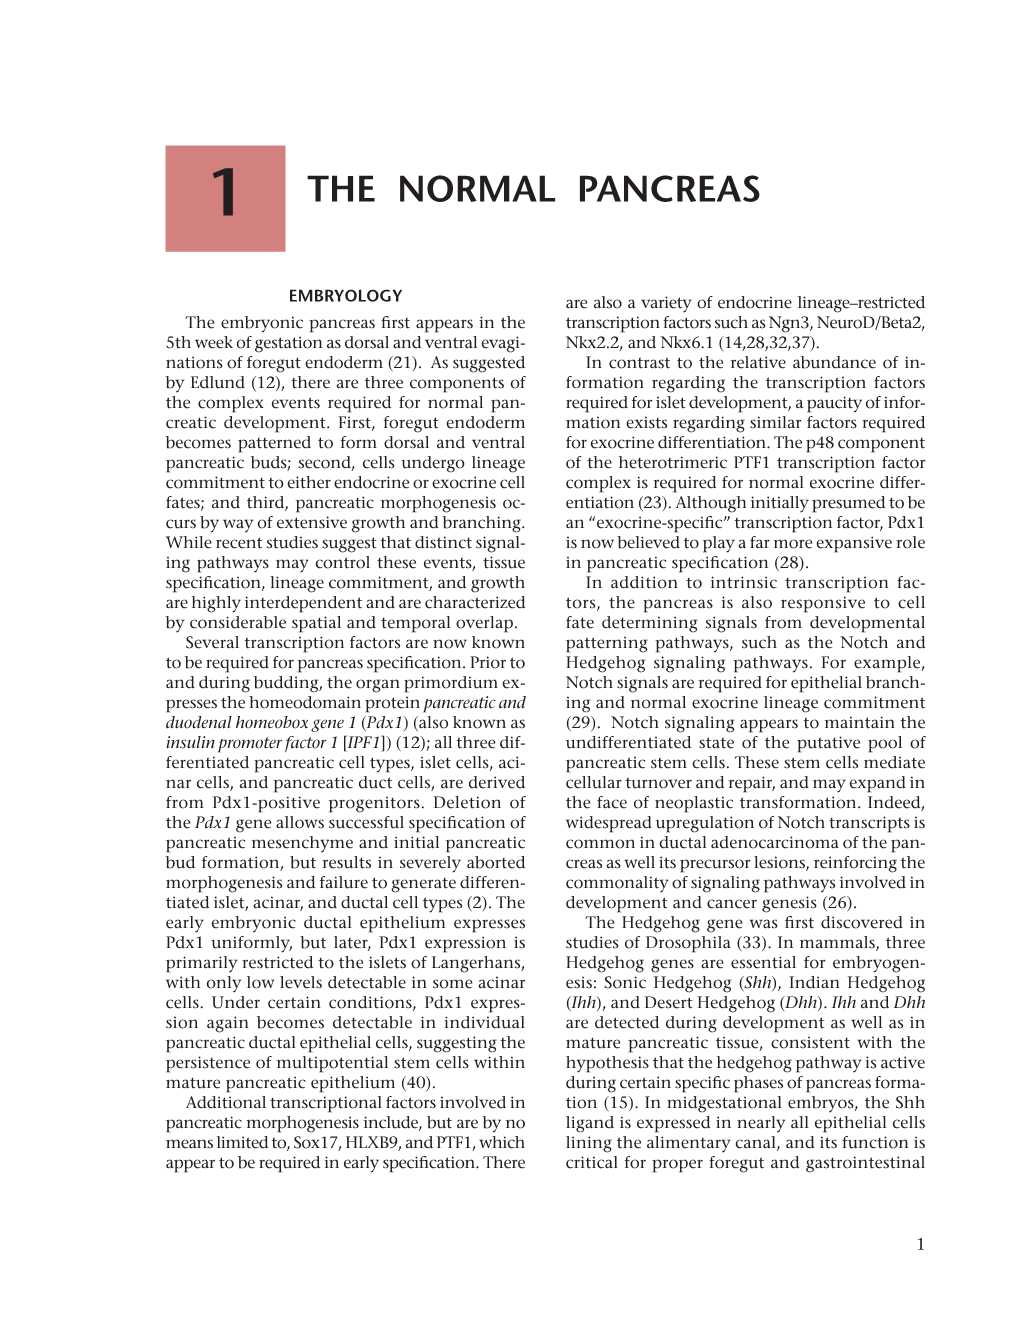 The Normal Pancreas